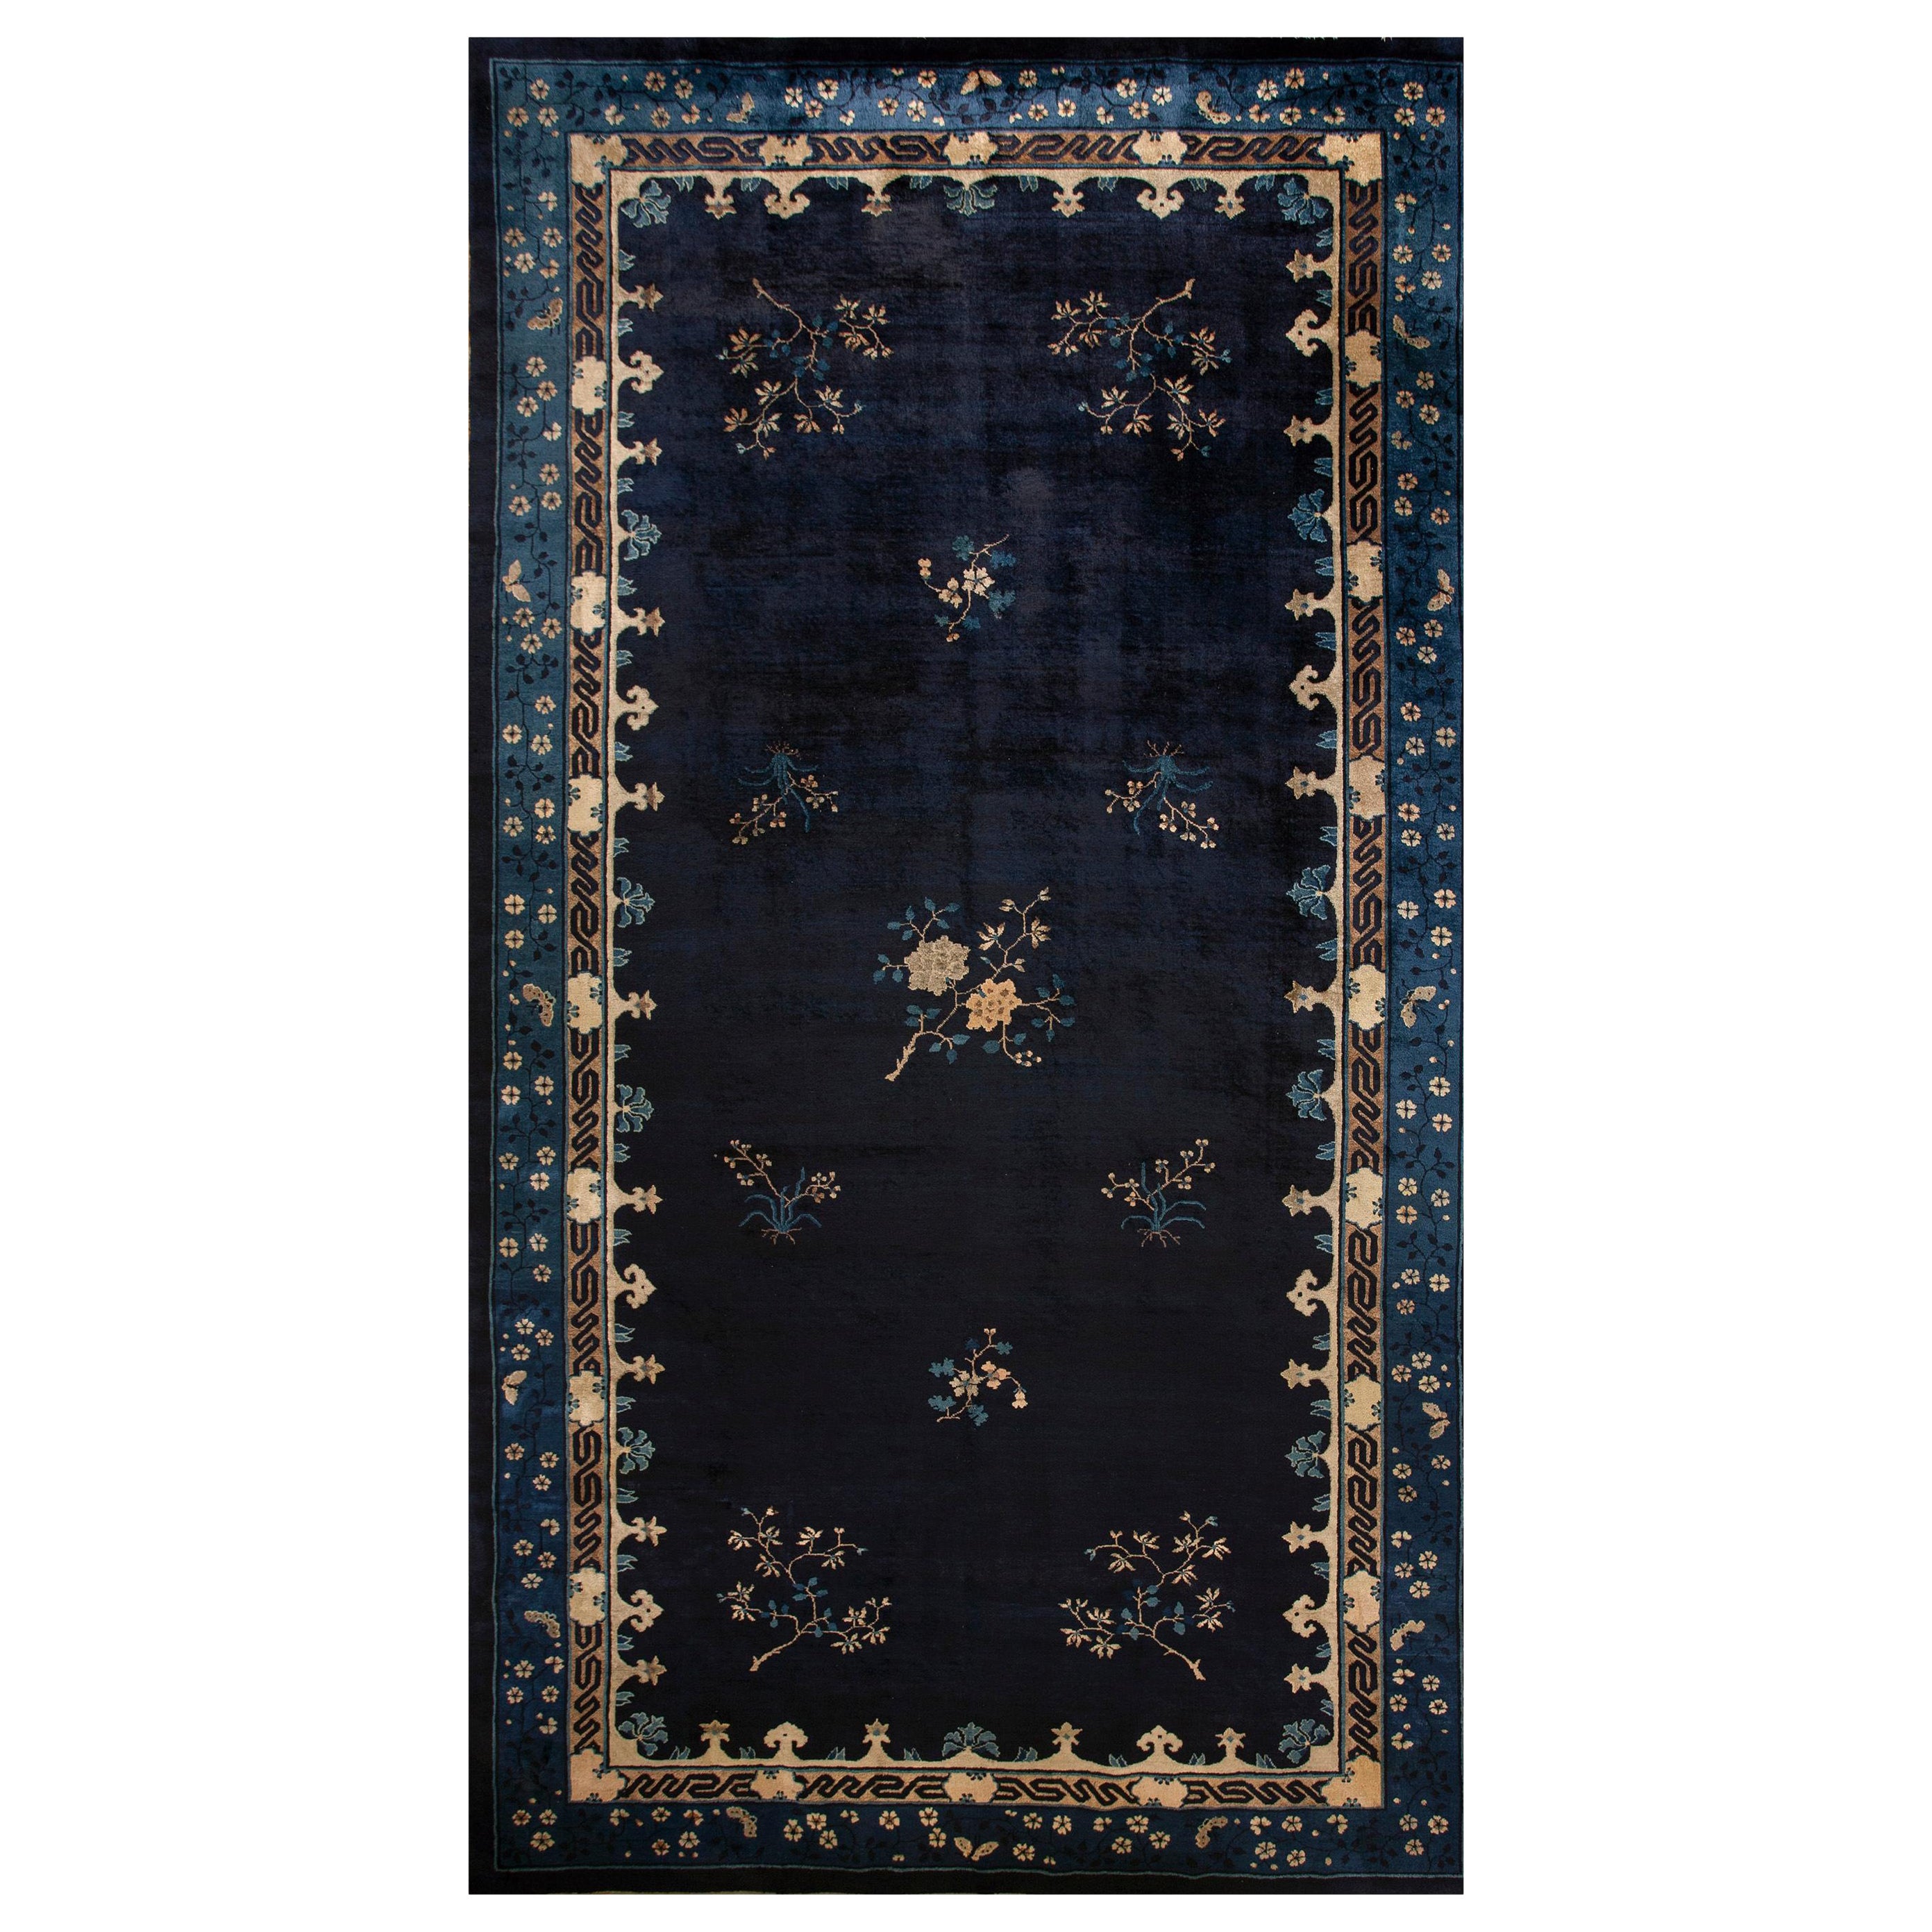 1920s  Chinese Peking Carpet ( 9'3" x 17'2" - 282 x 523 )